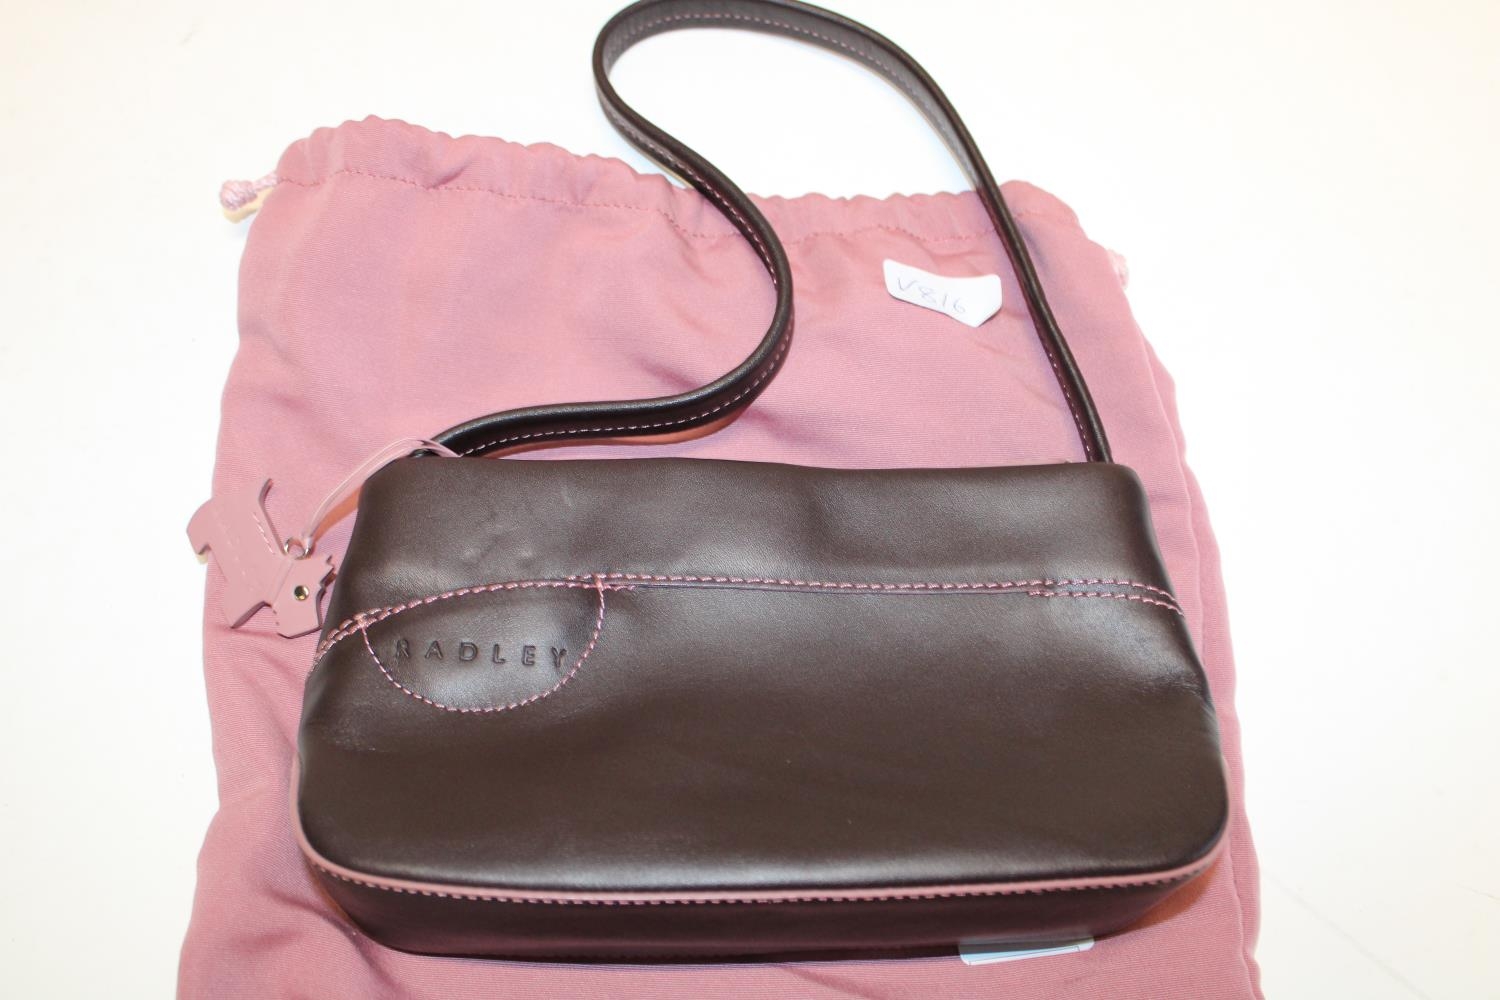 A ladies Radley handbag with dust bag